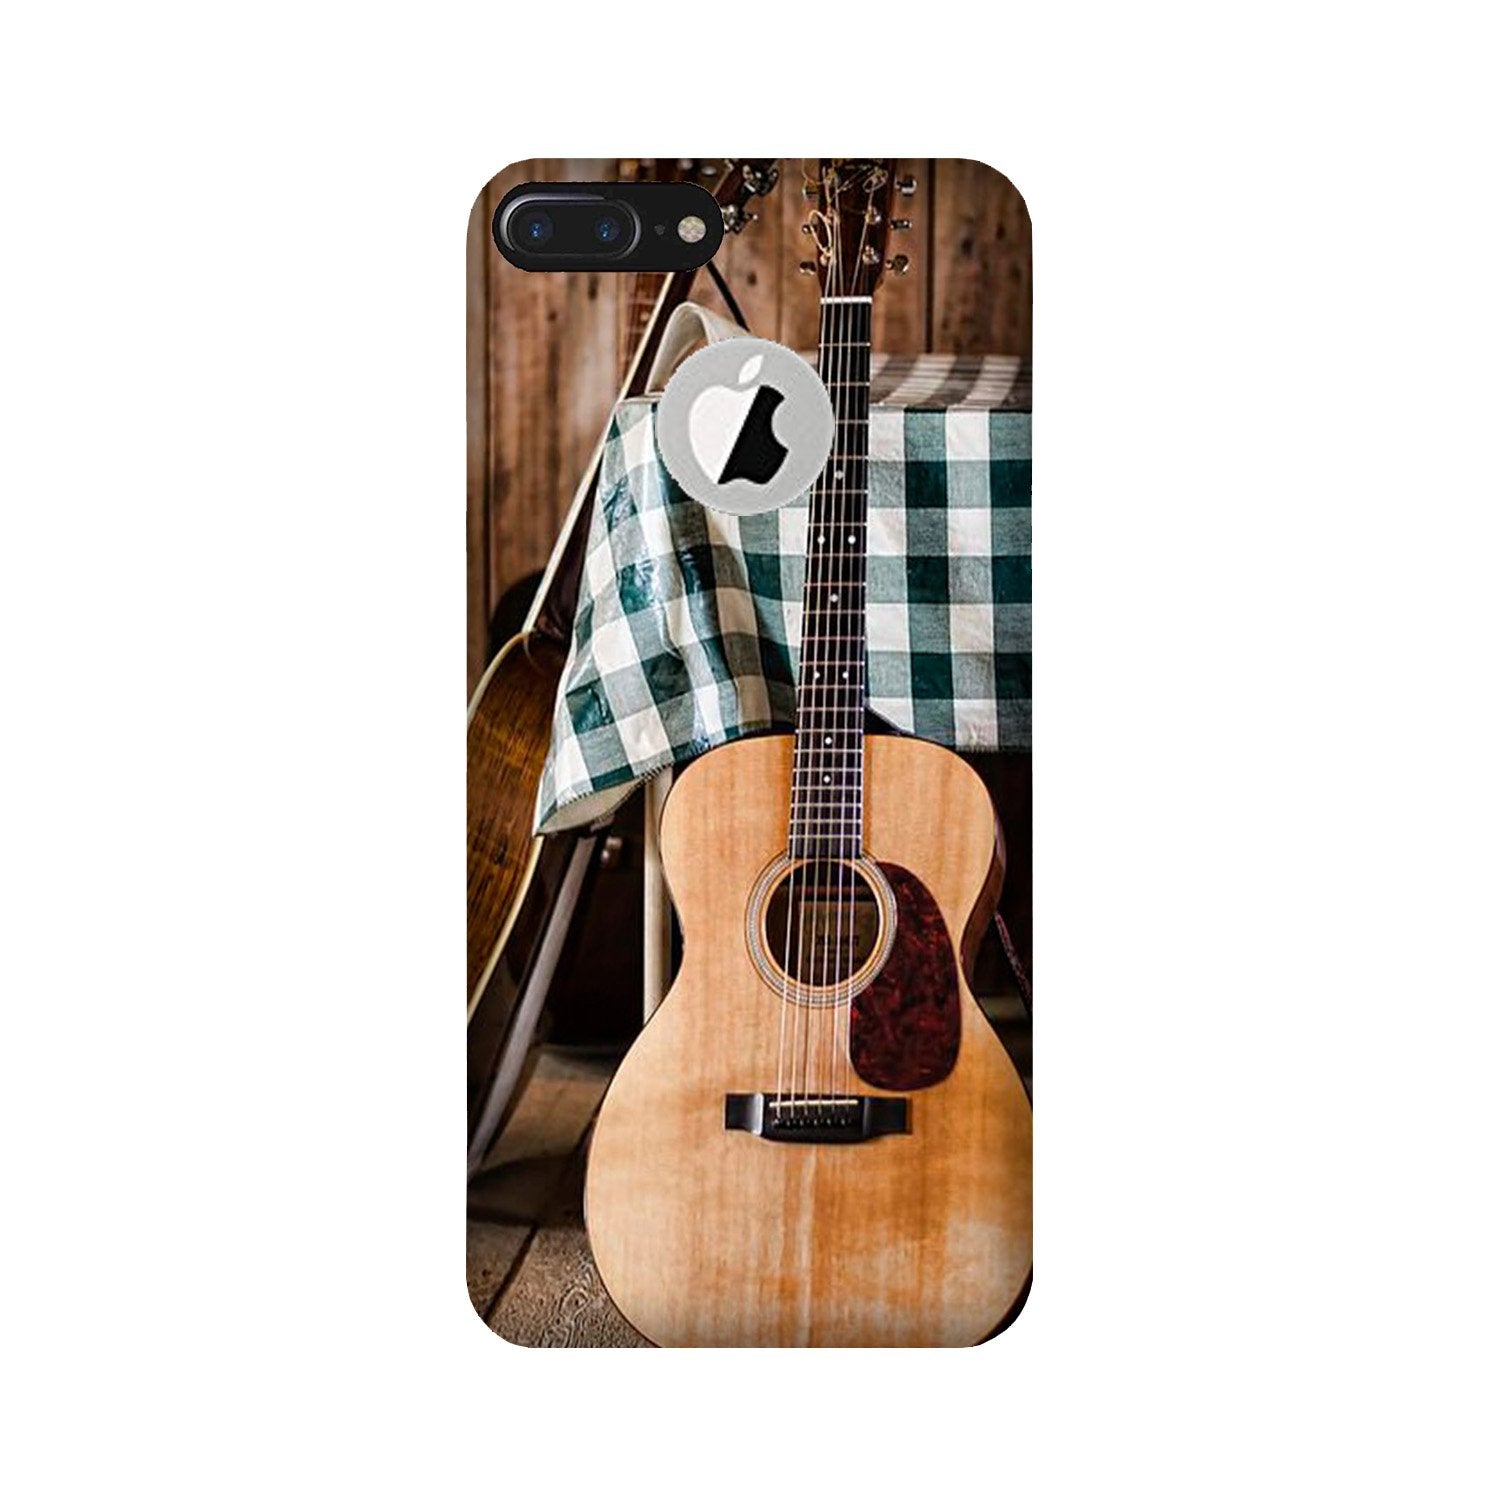 Guitar2 Case for iPhone 7 Plus logo cut